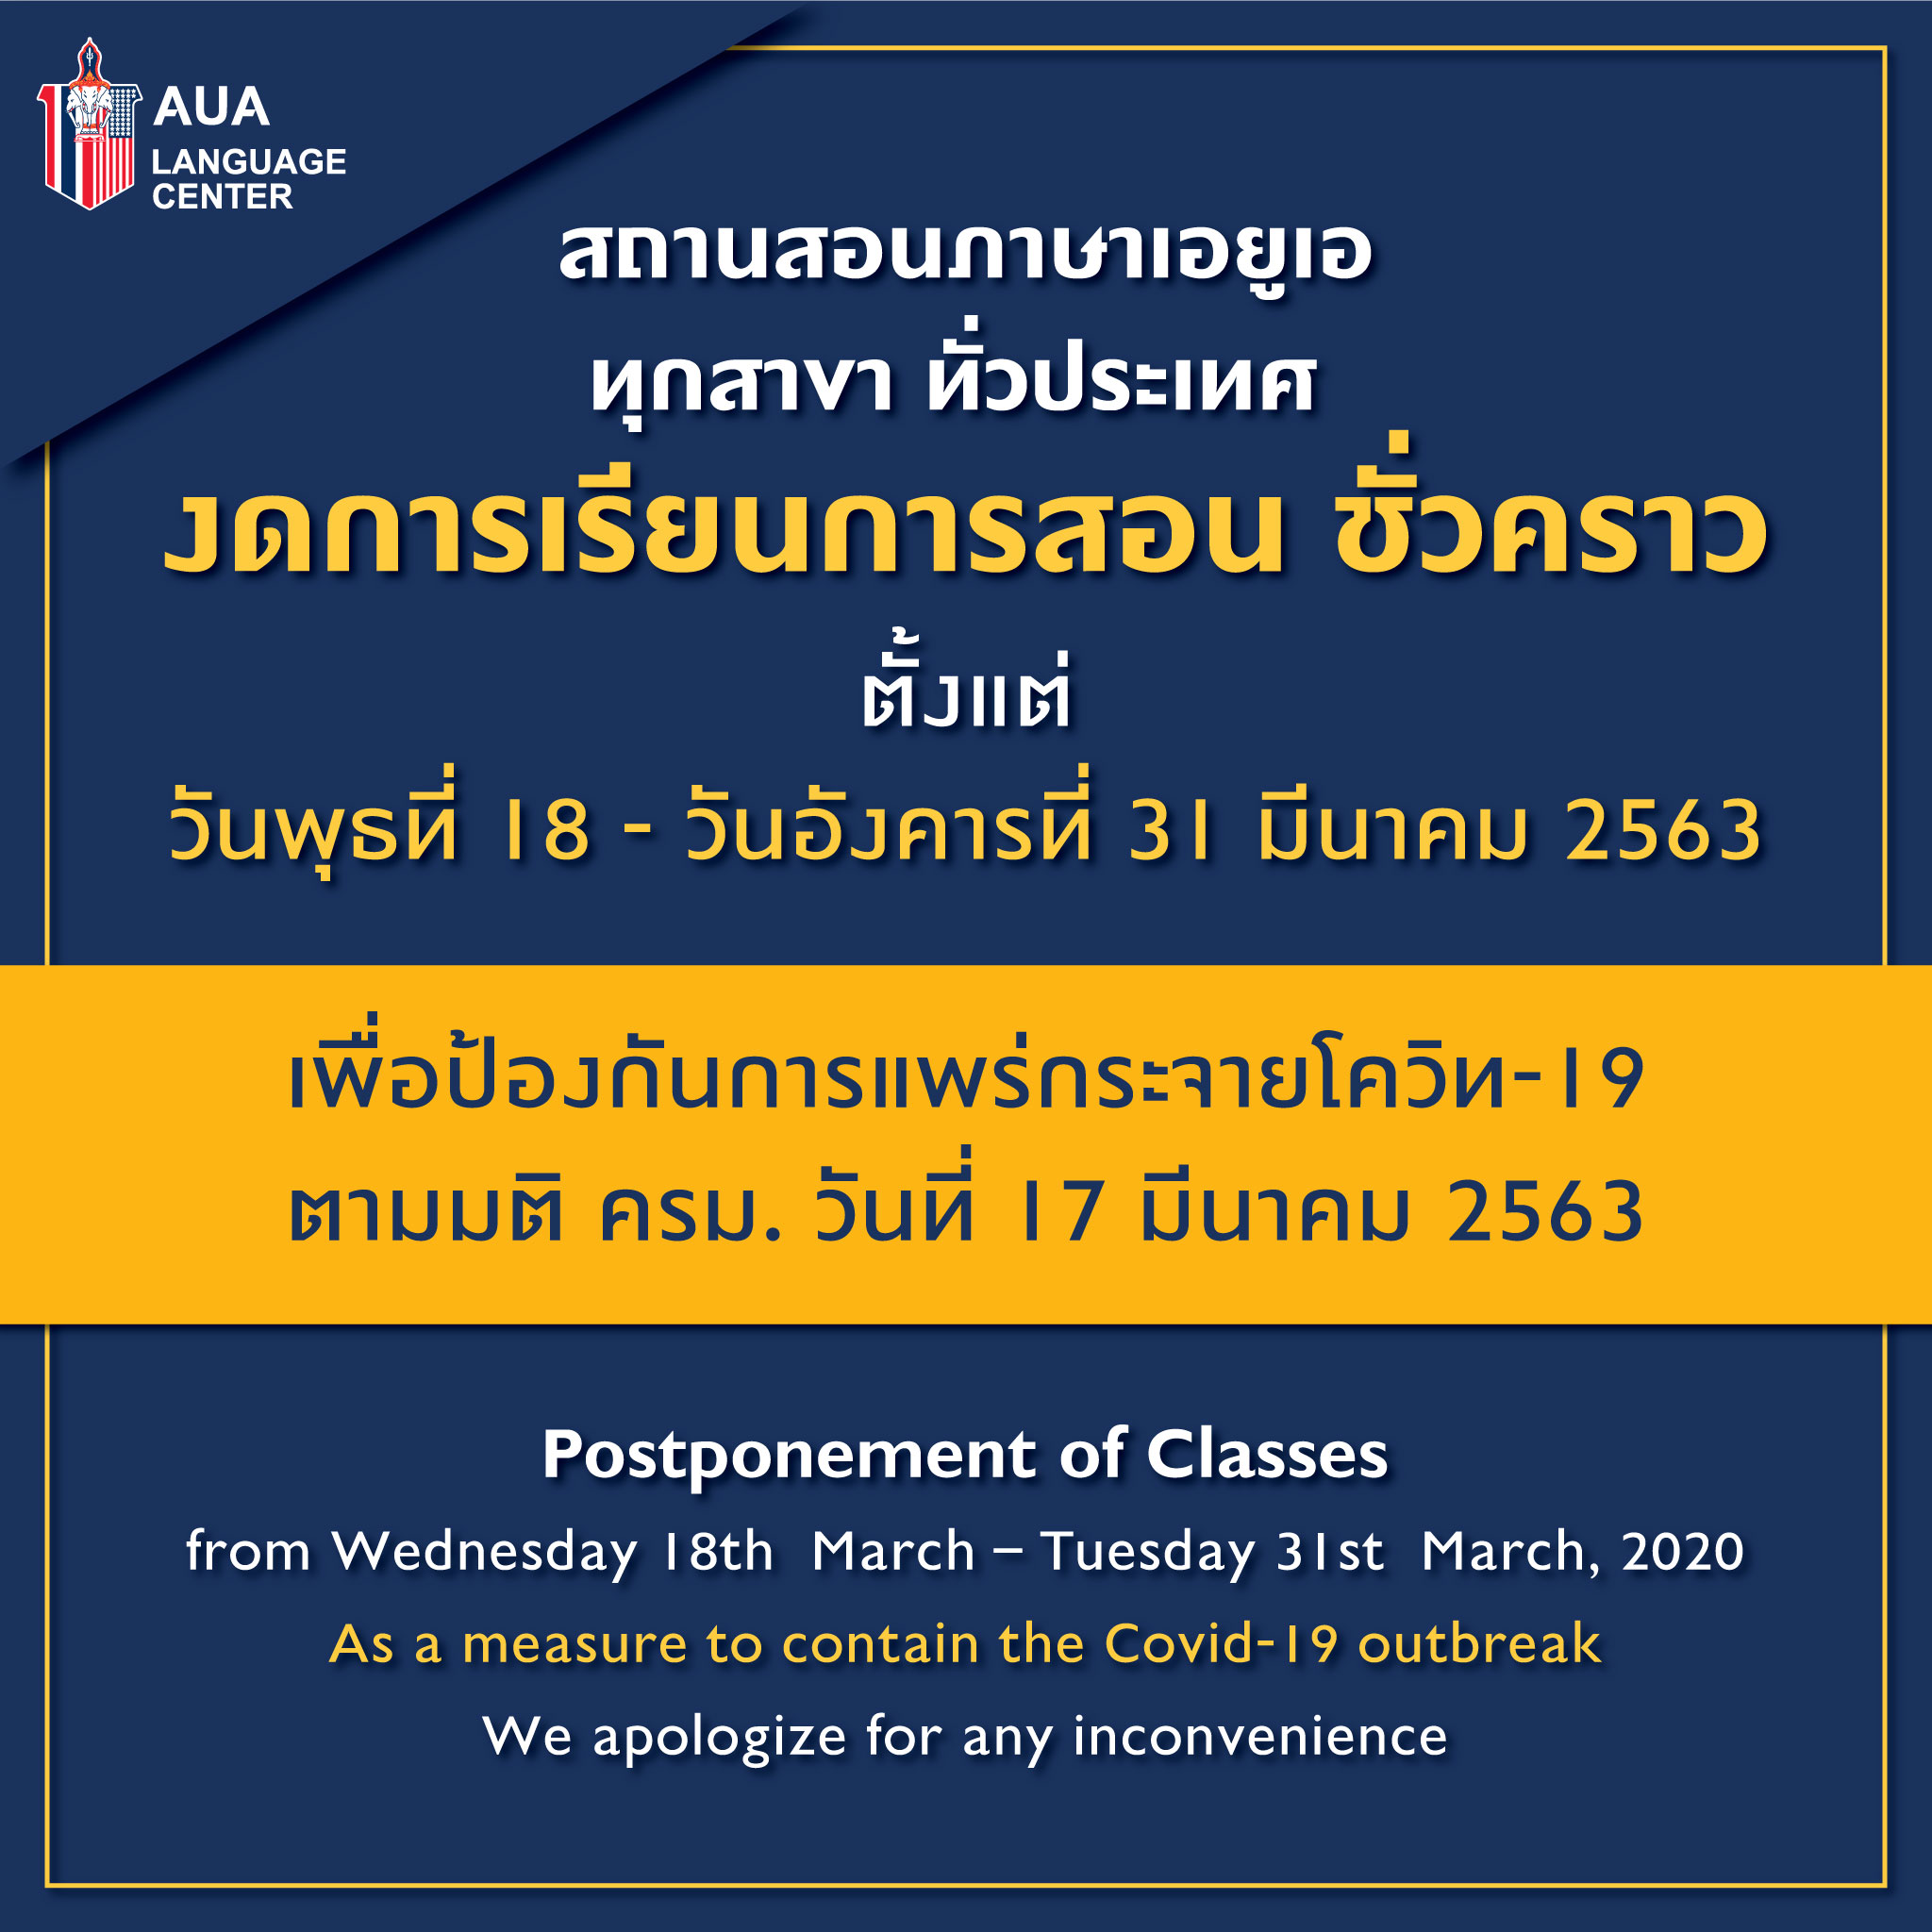 Postponement of Classes